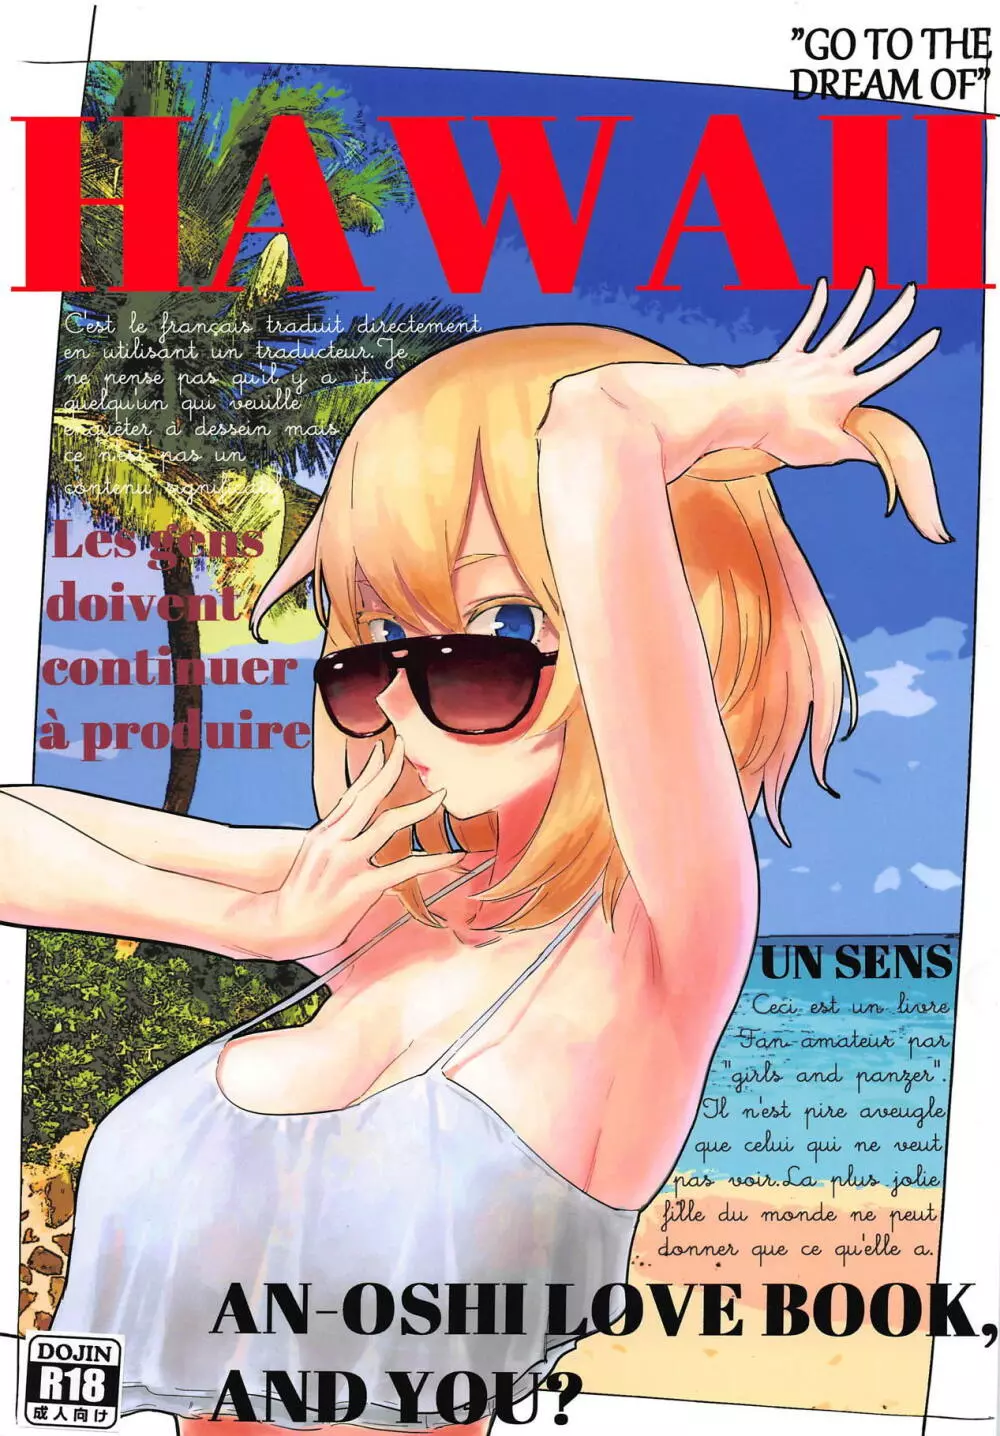 HAWAII - page1